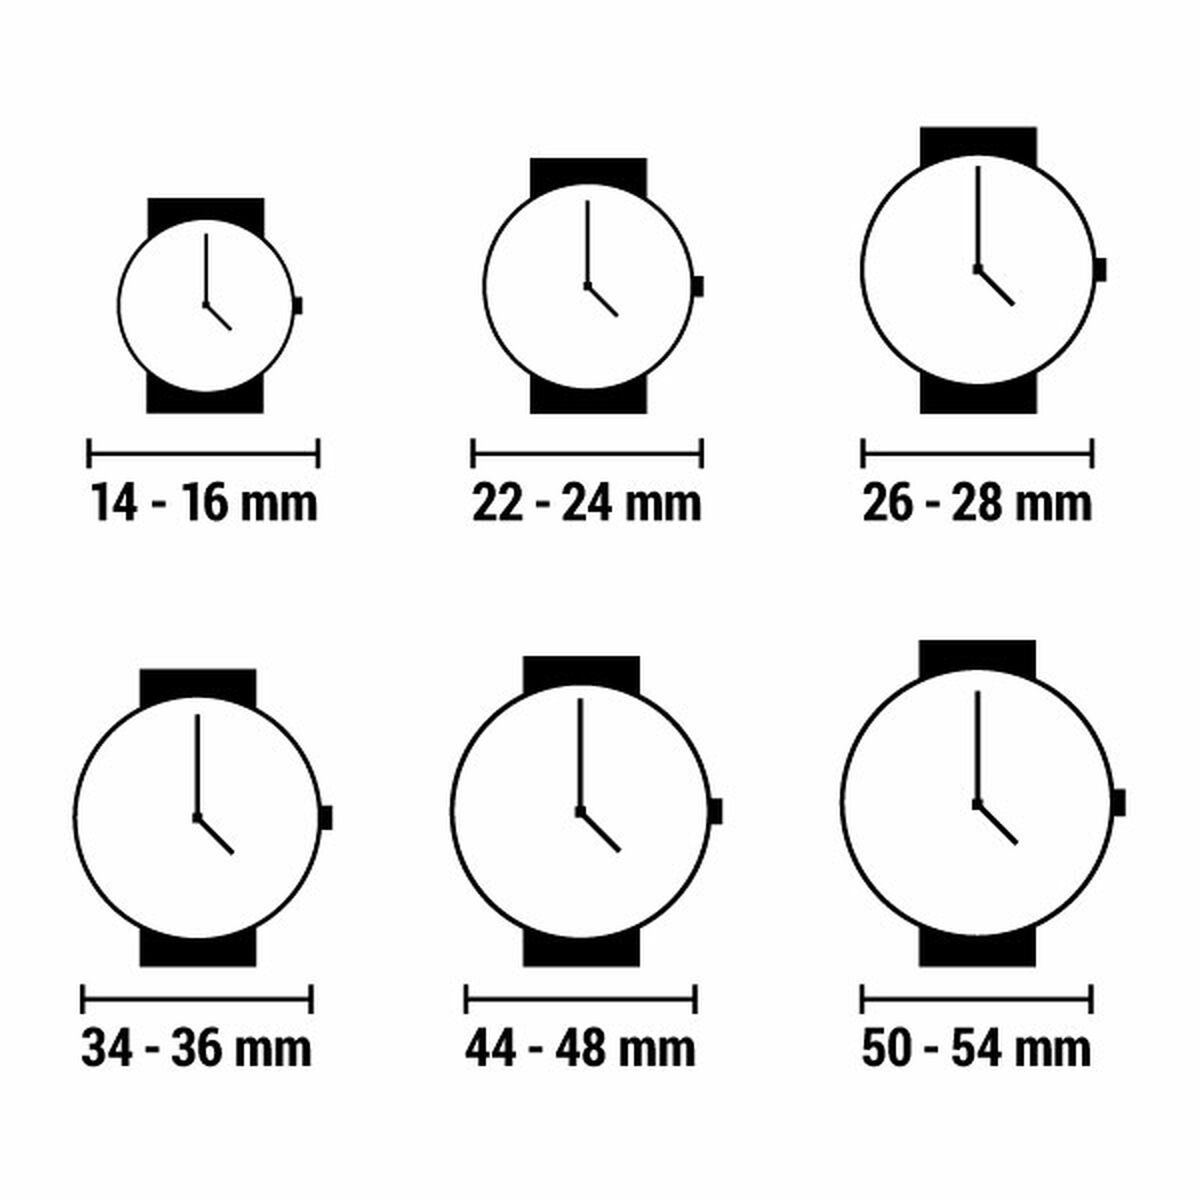 Horloge Dames Calvin Klein SEDUCE (Ø 30 mm)